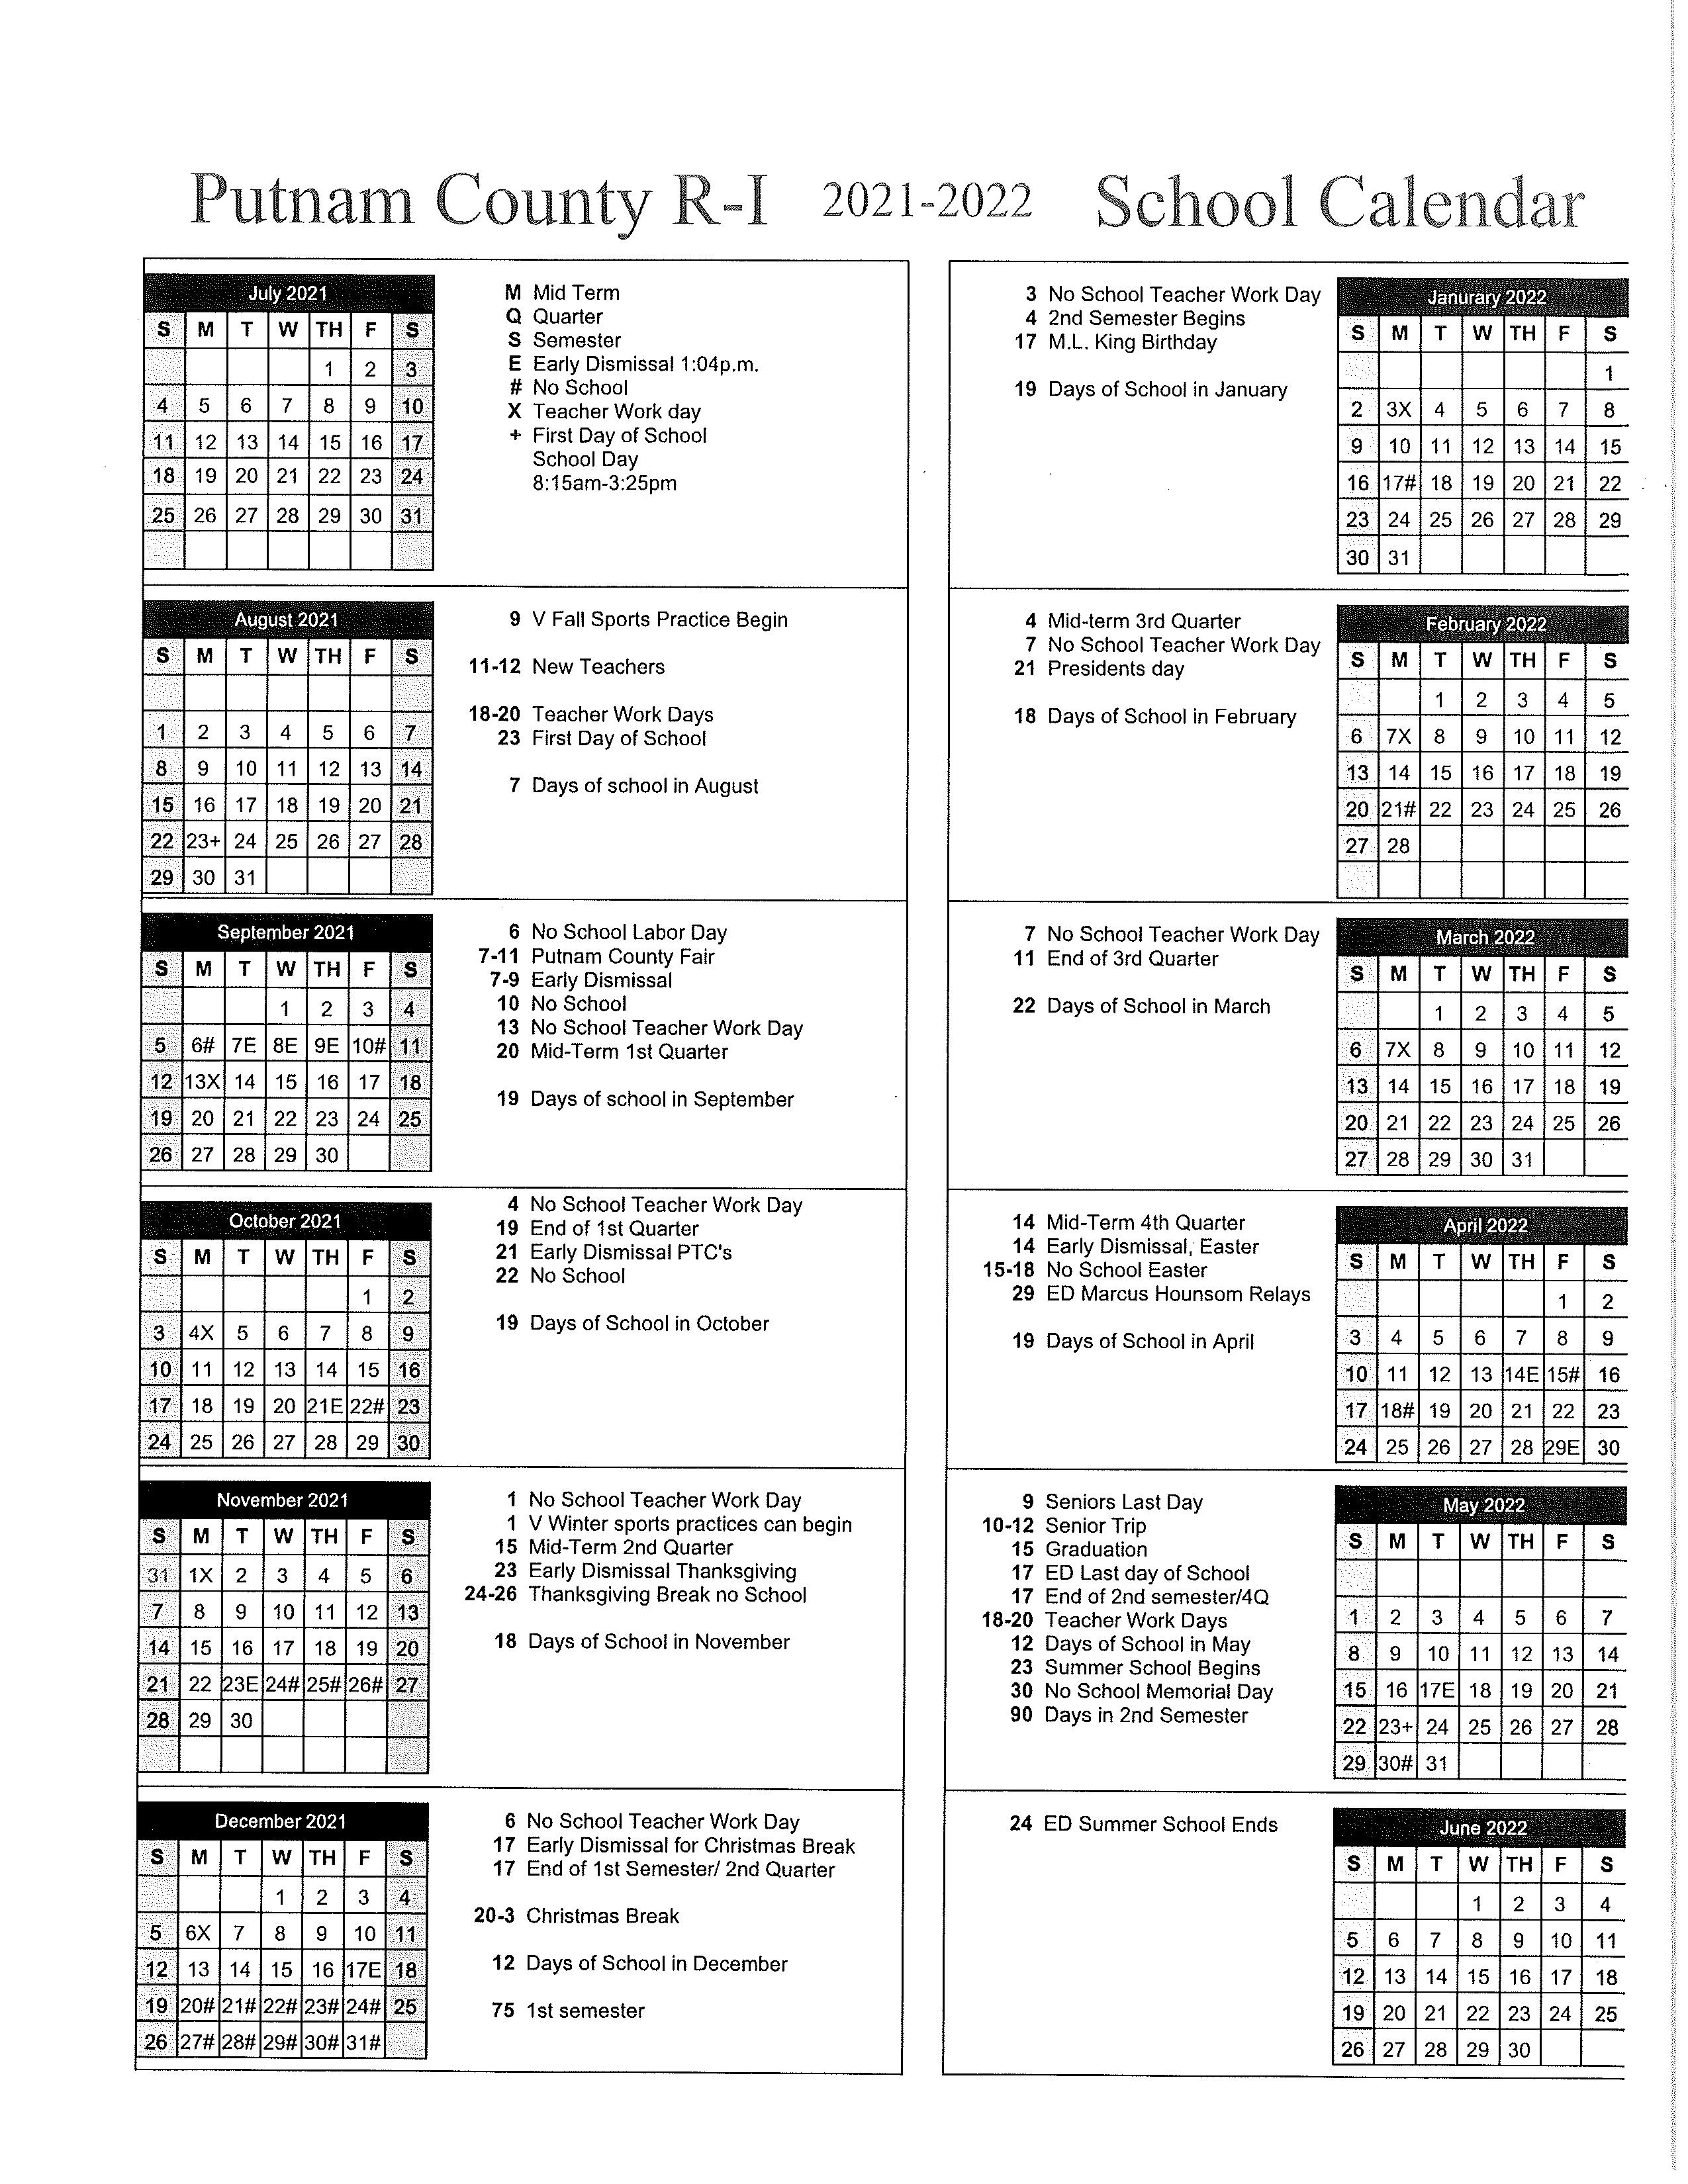 Putnam County School District Calendar 2021 And 2022 Publicholidays Us